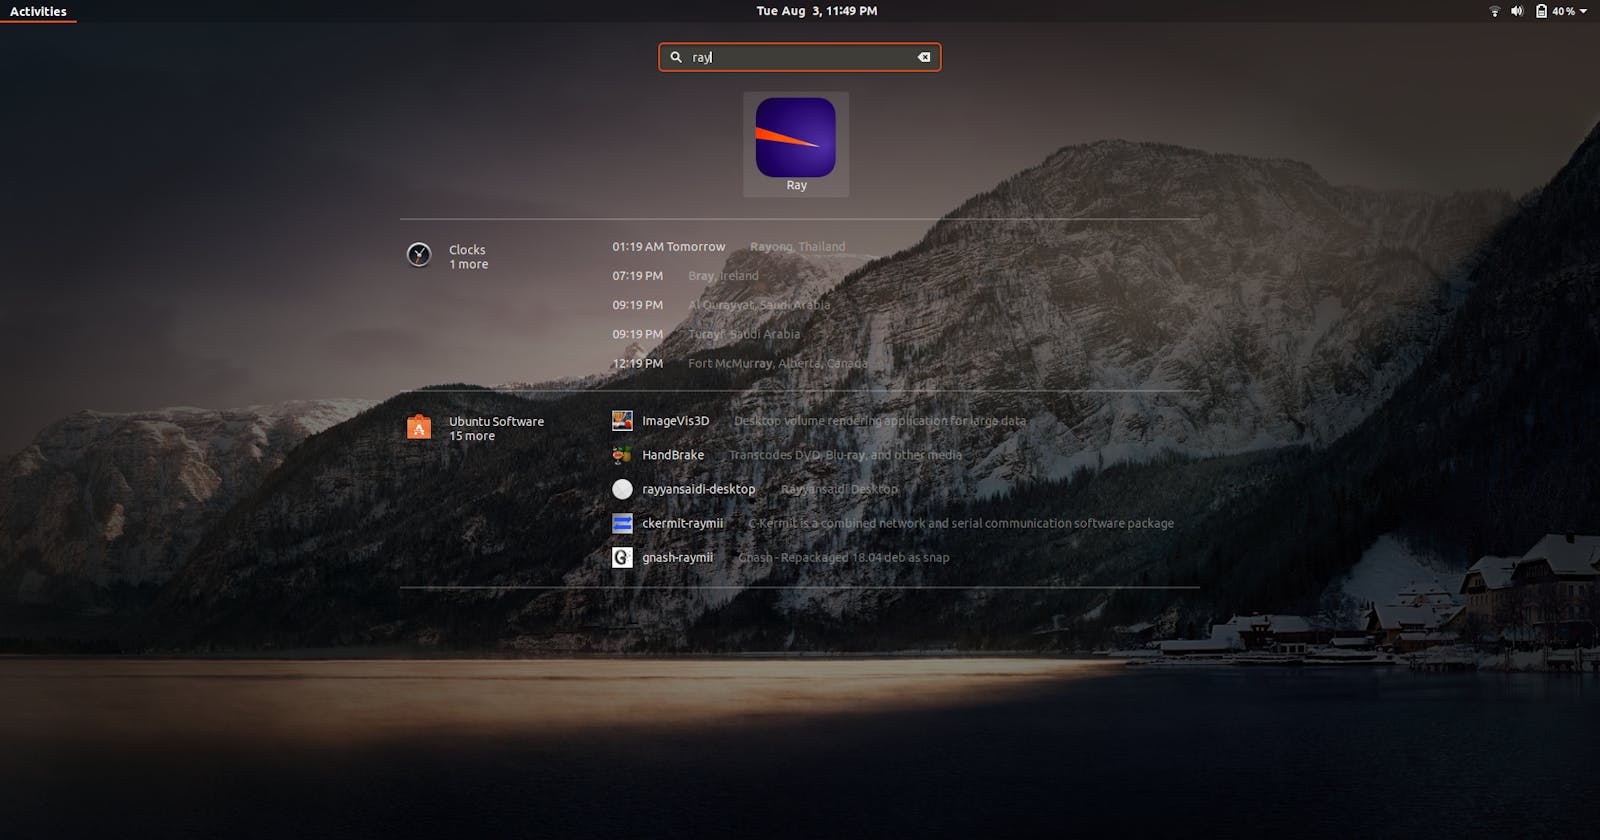 How to create a desktop or menu item for an appimage program in Ubuntu